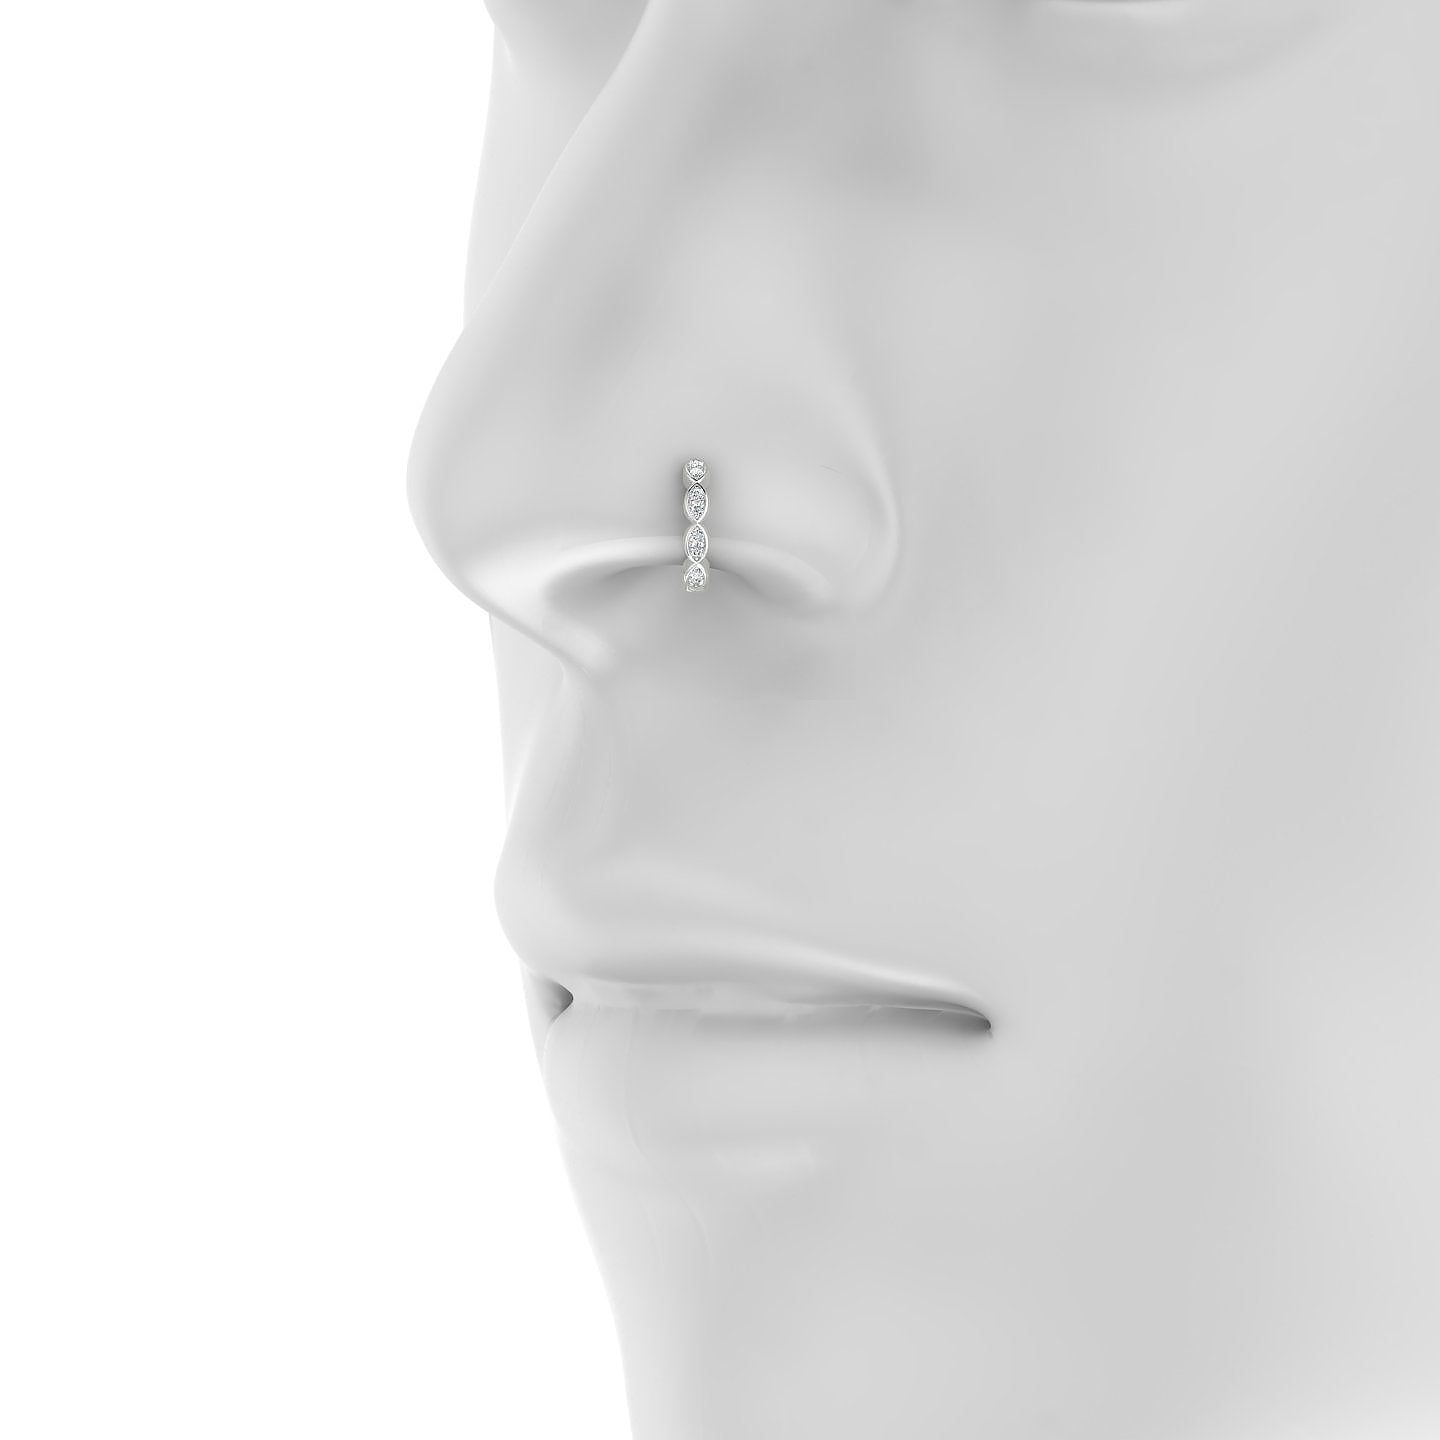 Hathor | 18k White Gold 8 mm Diamond Nose Ring Piercing